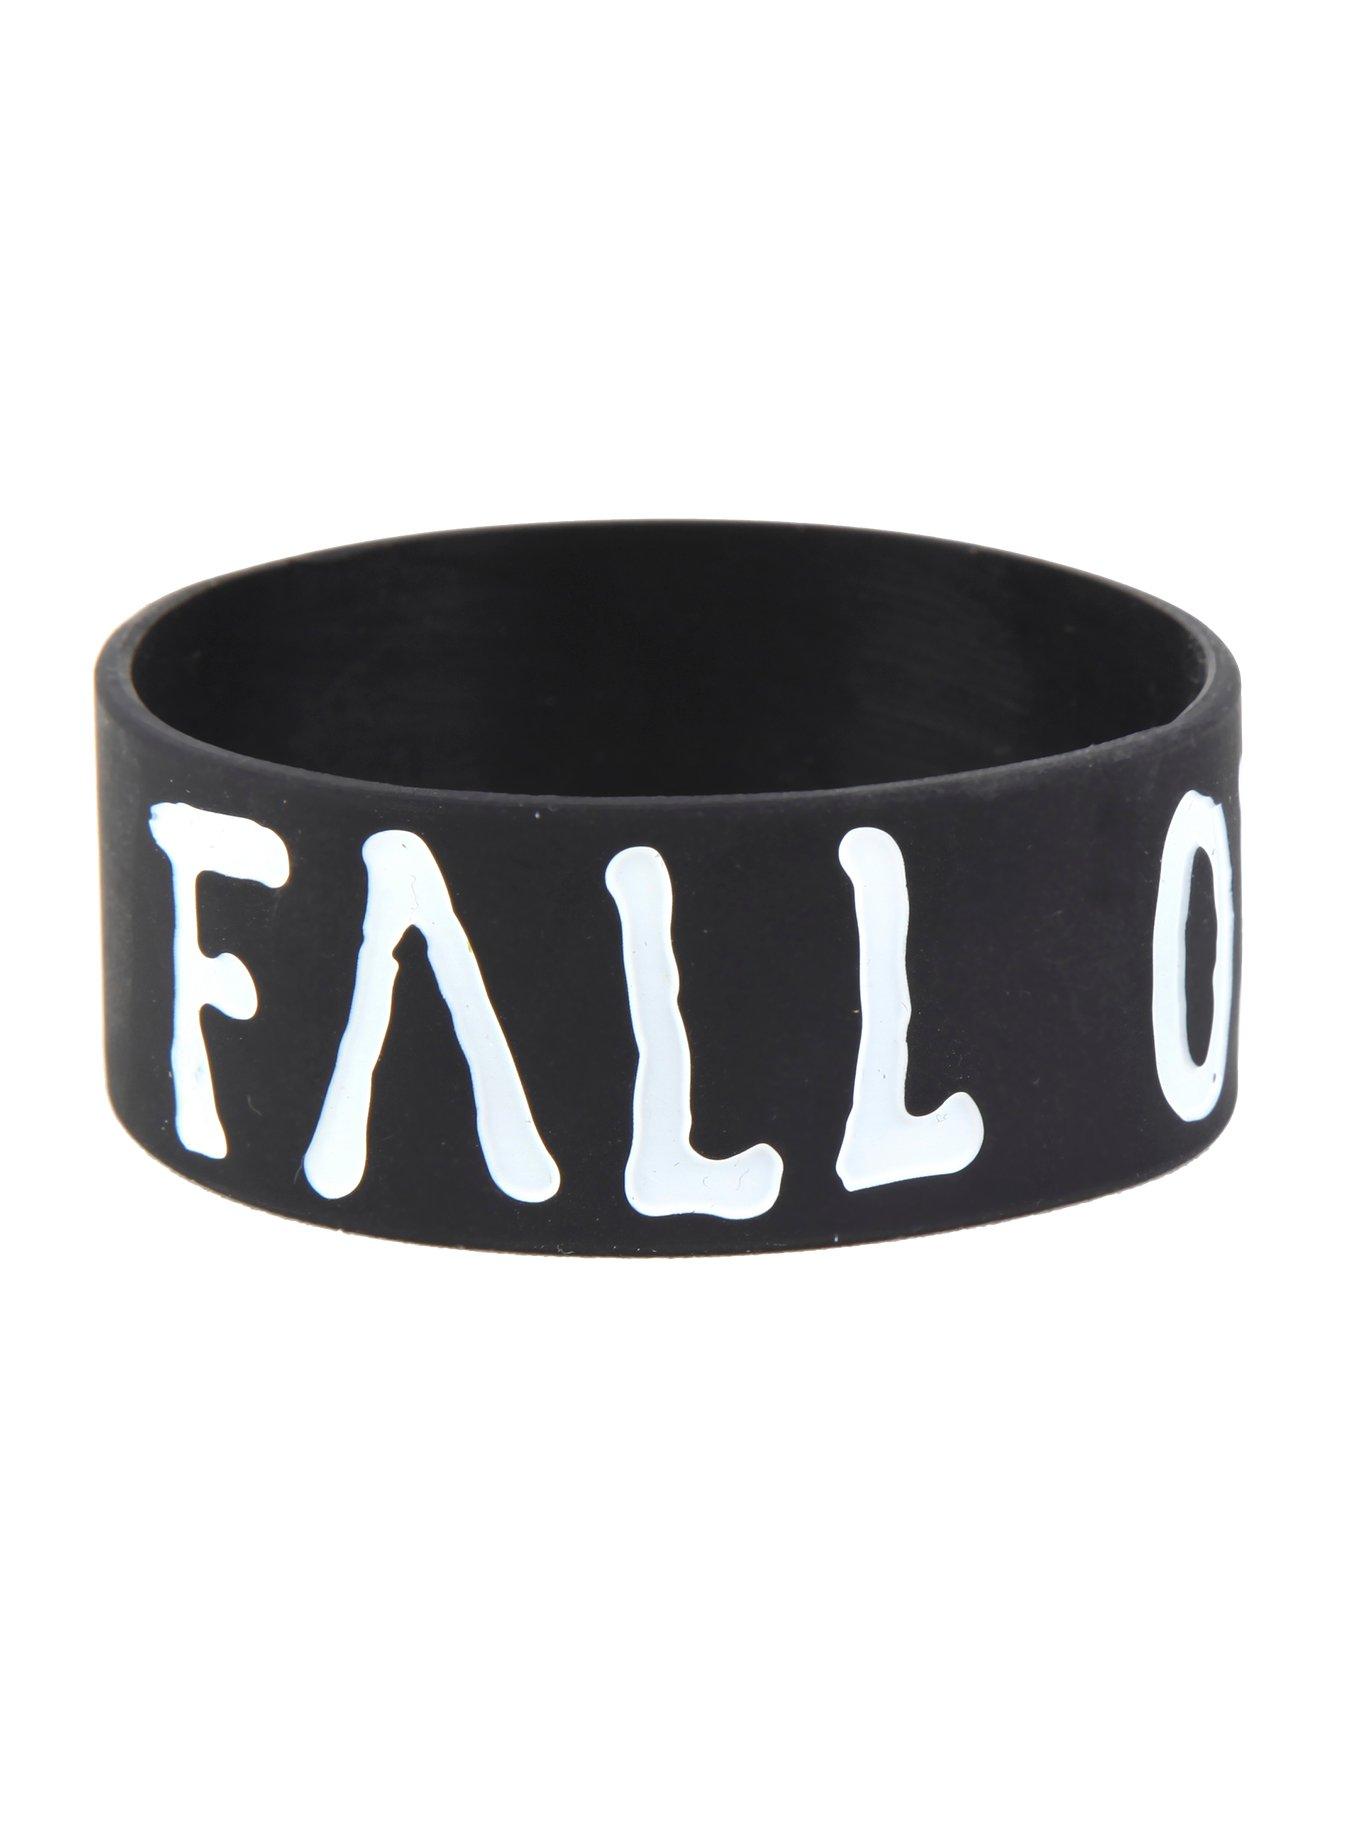 Fall Out Boy Logo Rubber Bracelet, , hi-res